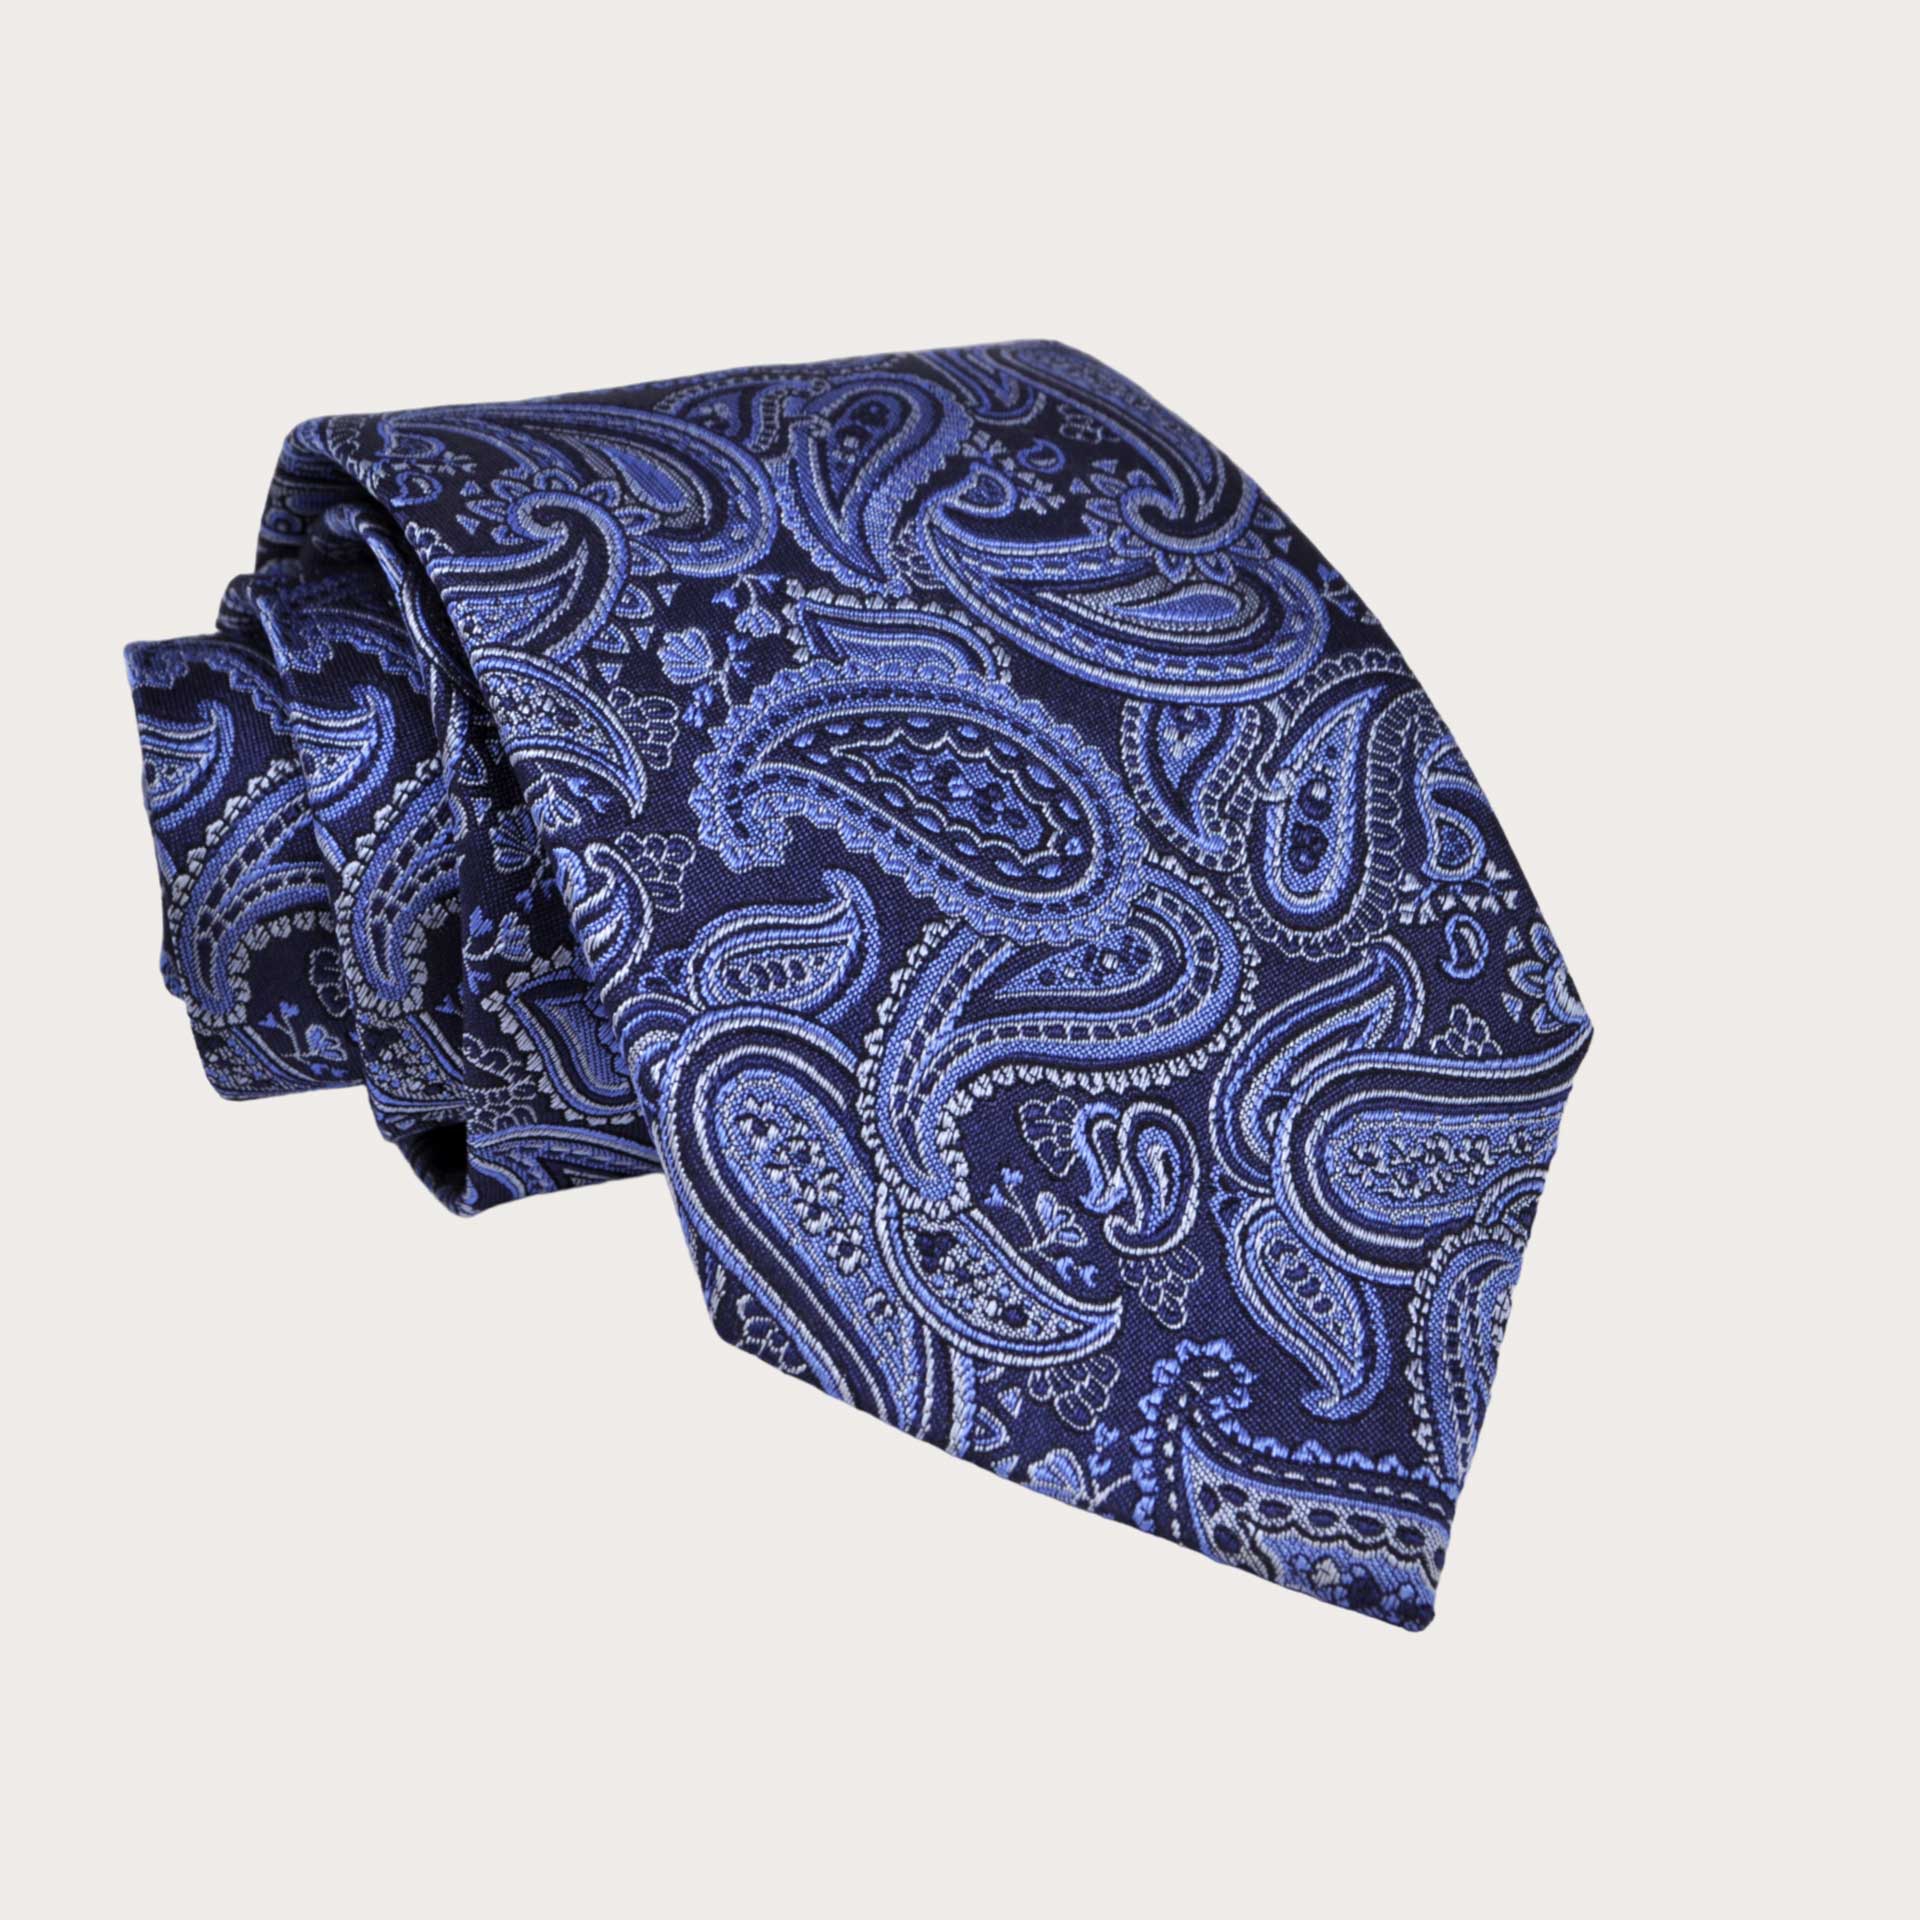 BRUCLE Corbata de hombre paisley azul en seda jacquard